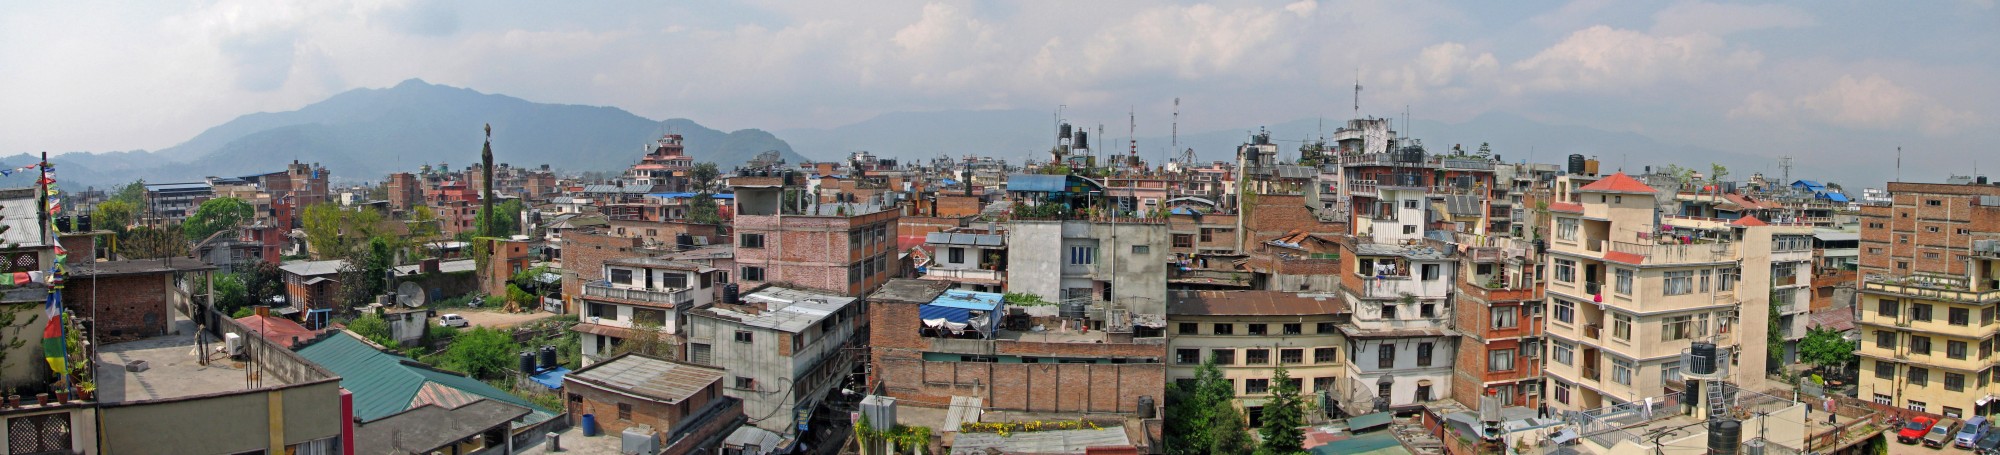 Nepal - Kathmandu - Roofscape 1 (493491524)